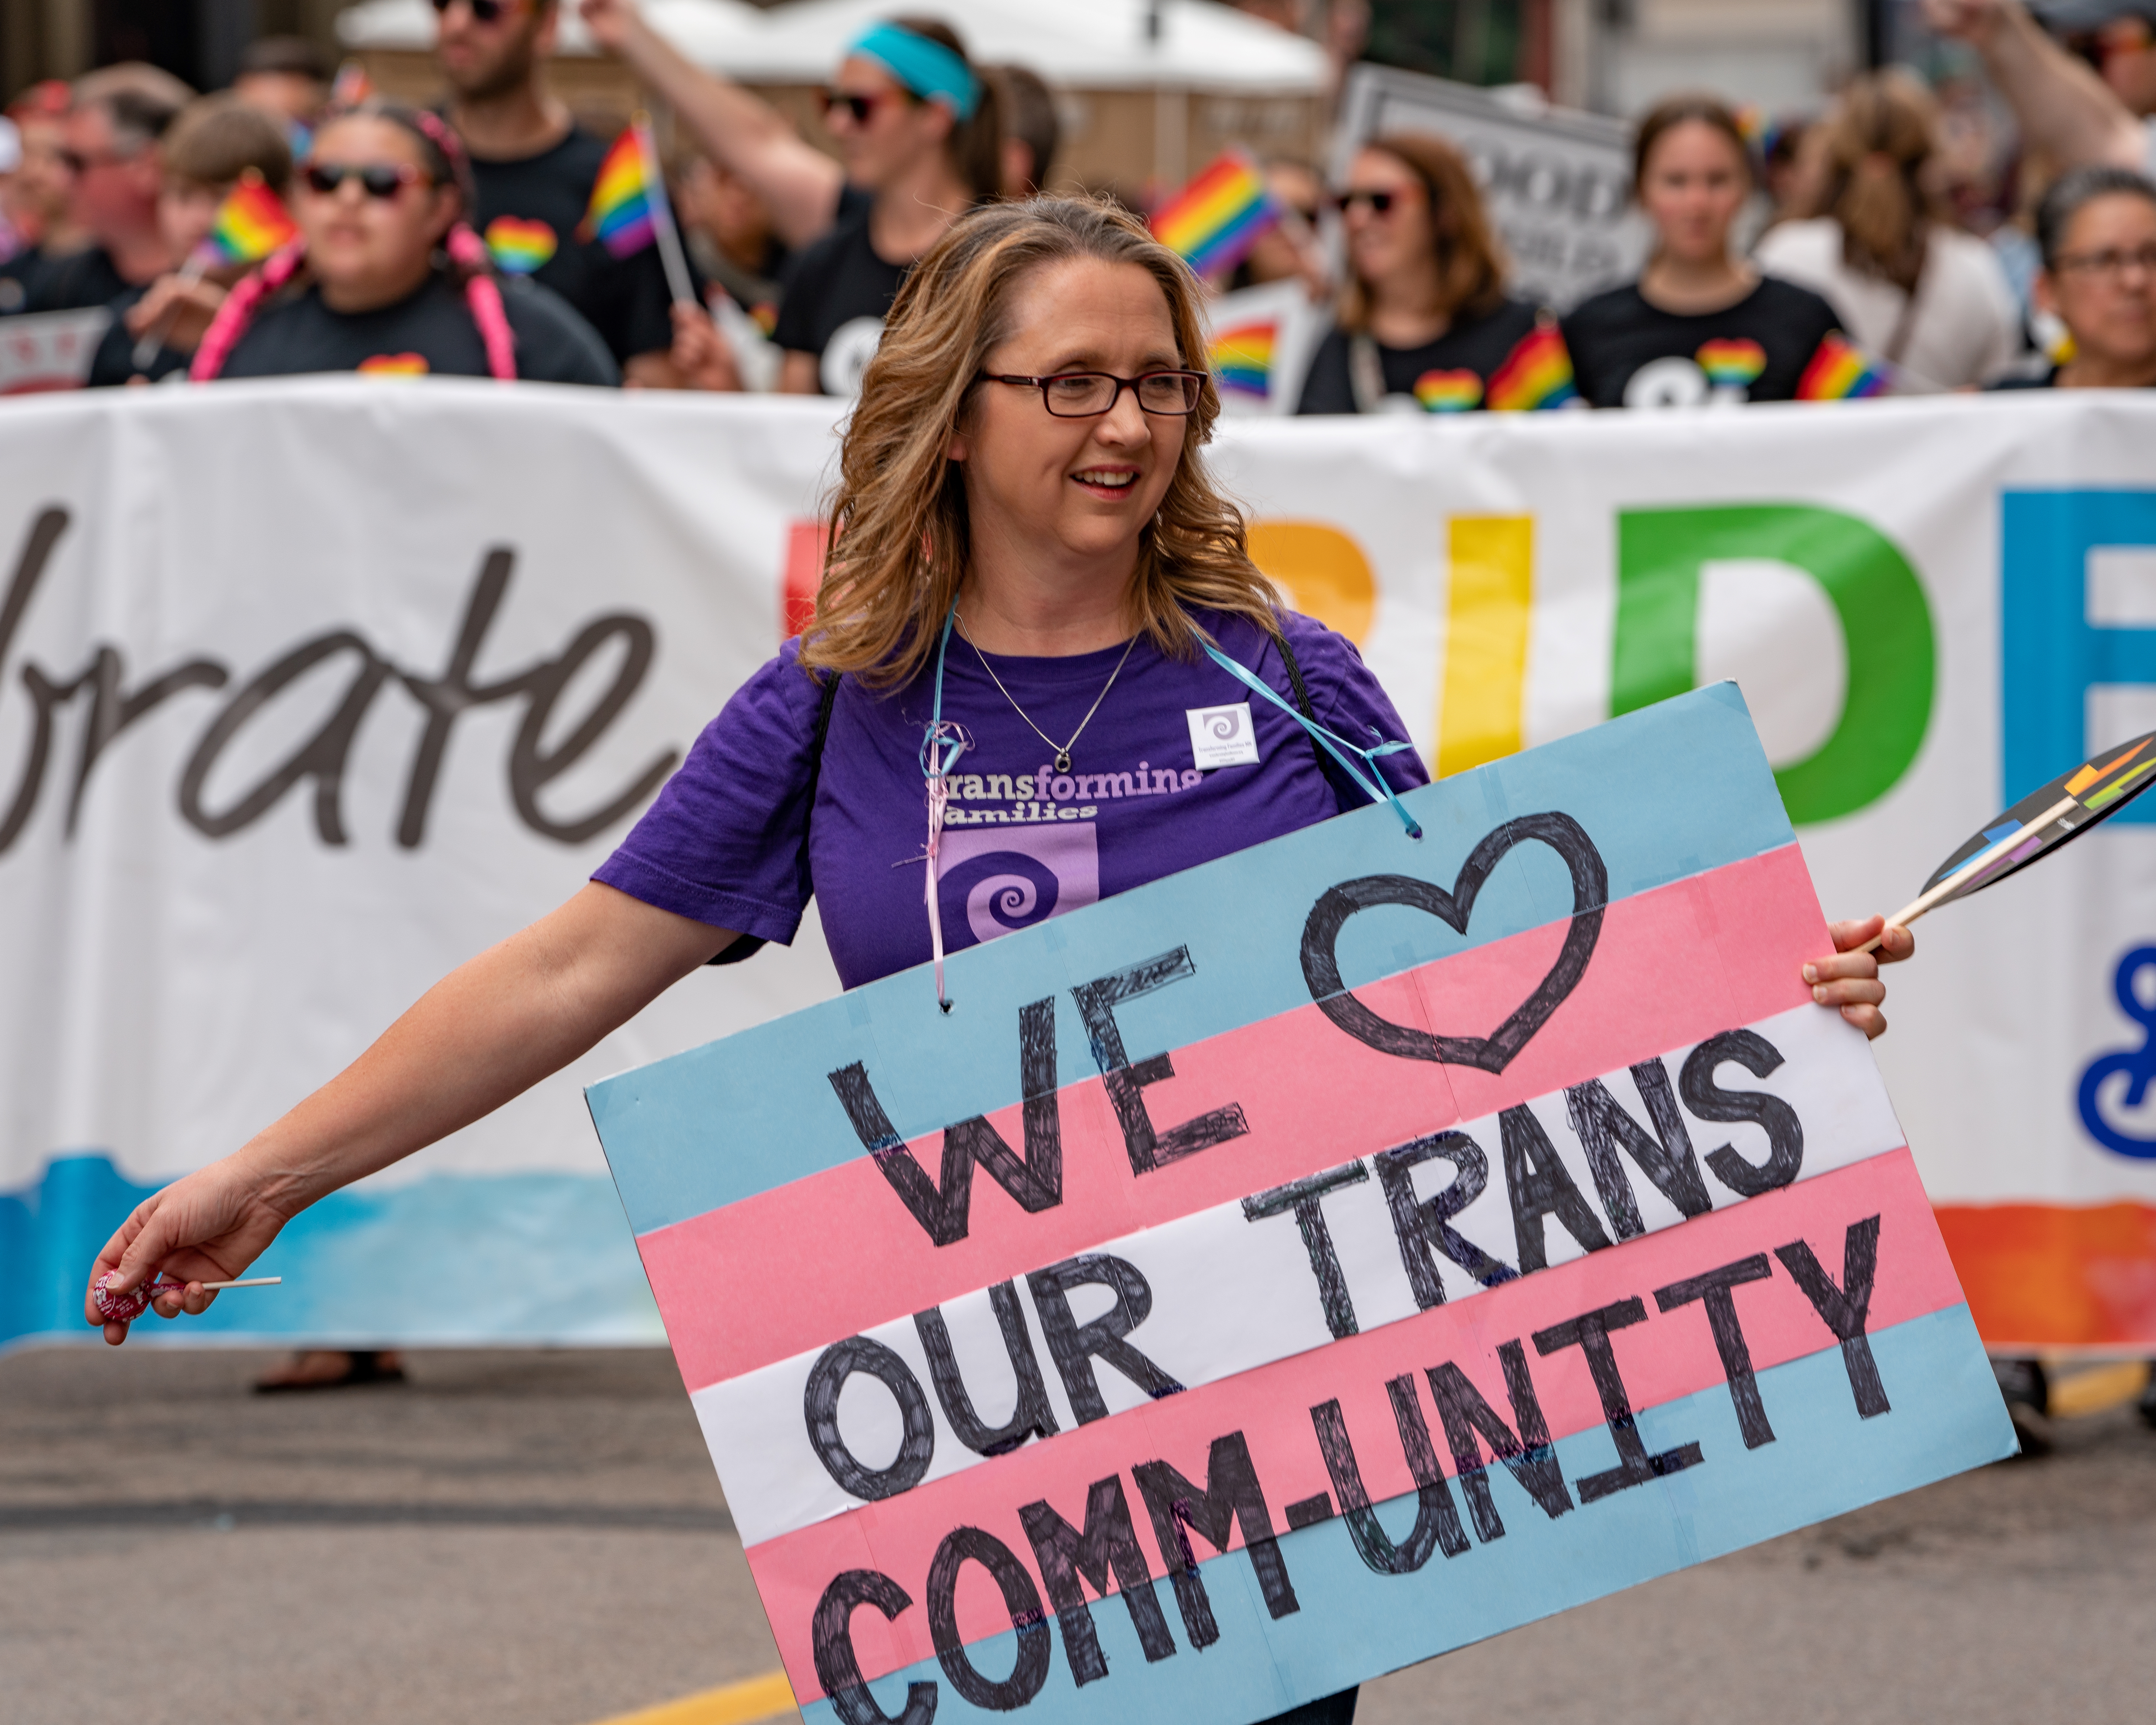 Minneapolis legalizes gender-affirming healthcare for transgender community